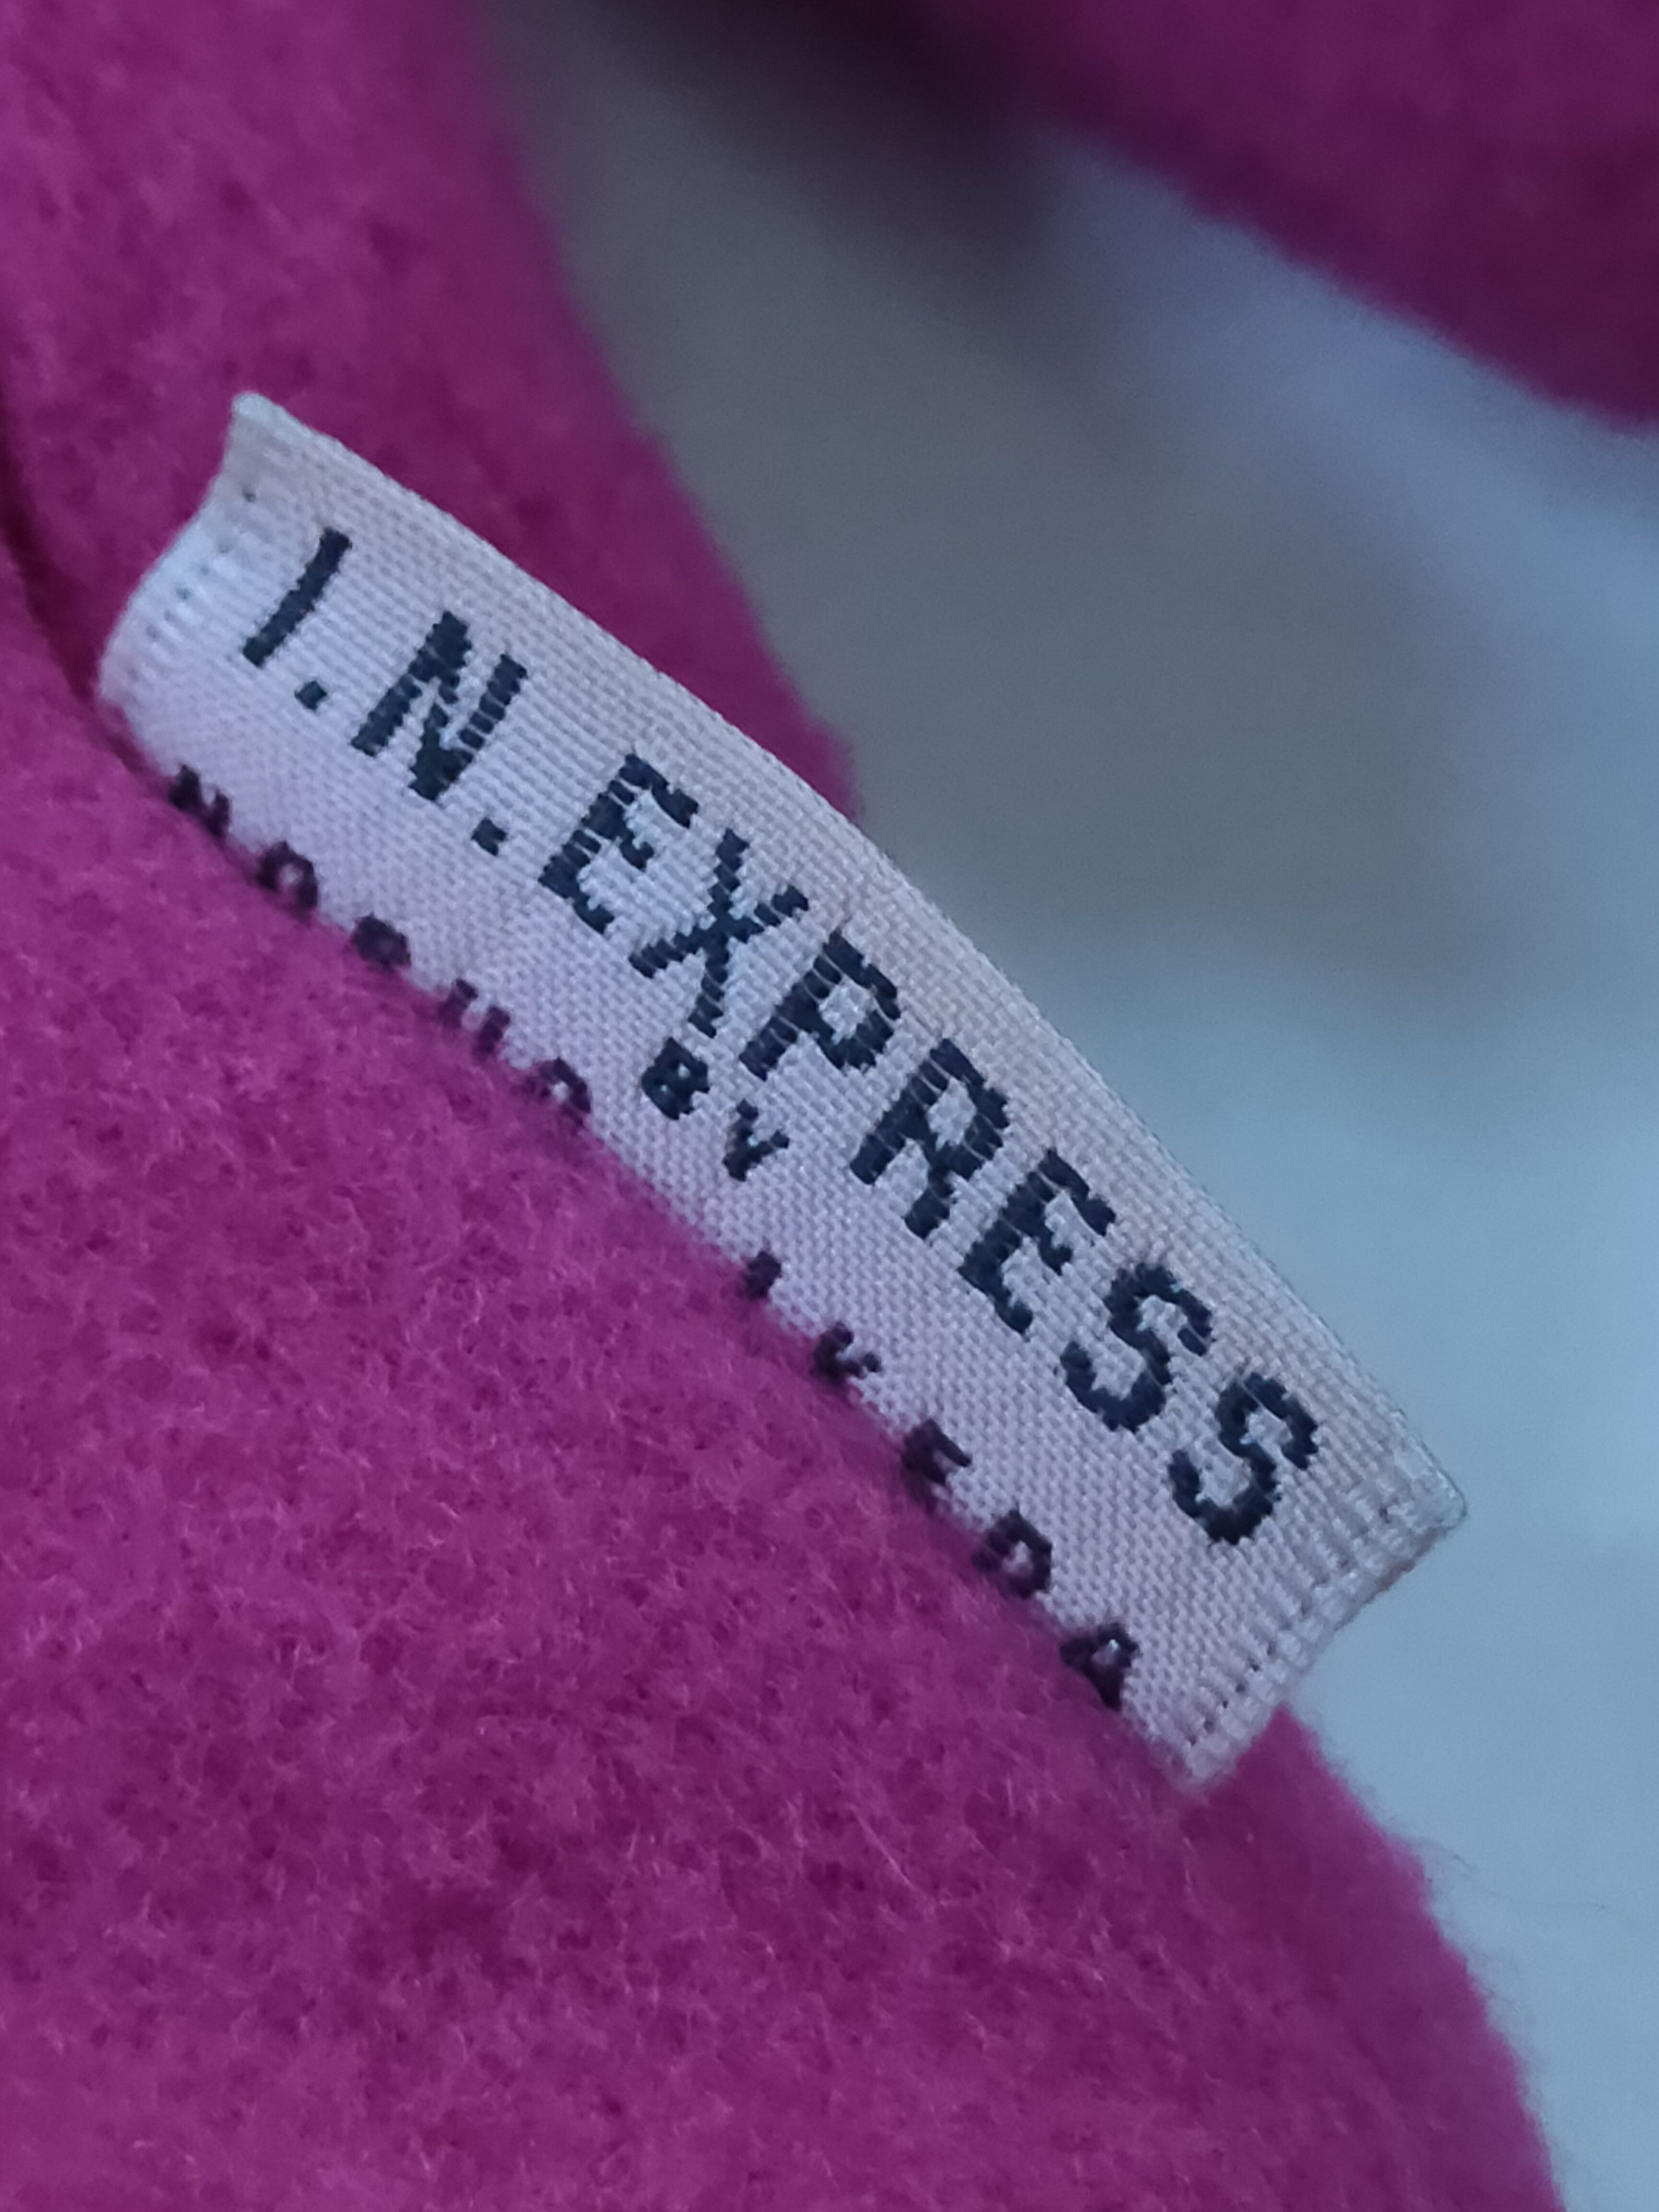 Japanese Brand I.N Express By Nubuo Ikeda Embroidery Navajo Wool Jacket Size US M / EU 48-50 / 2 - 7 Thumbnail